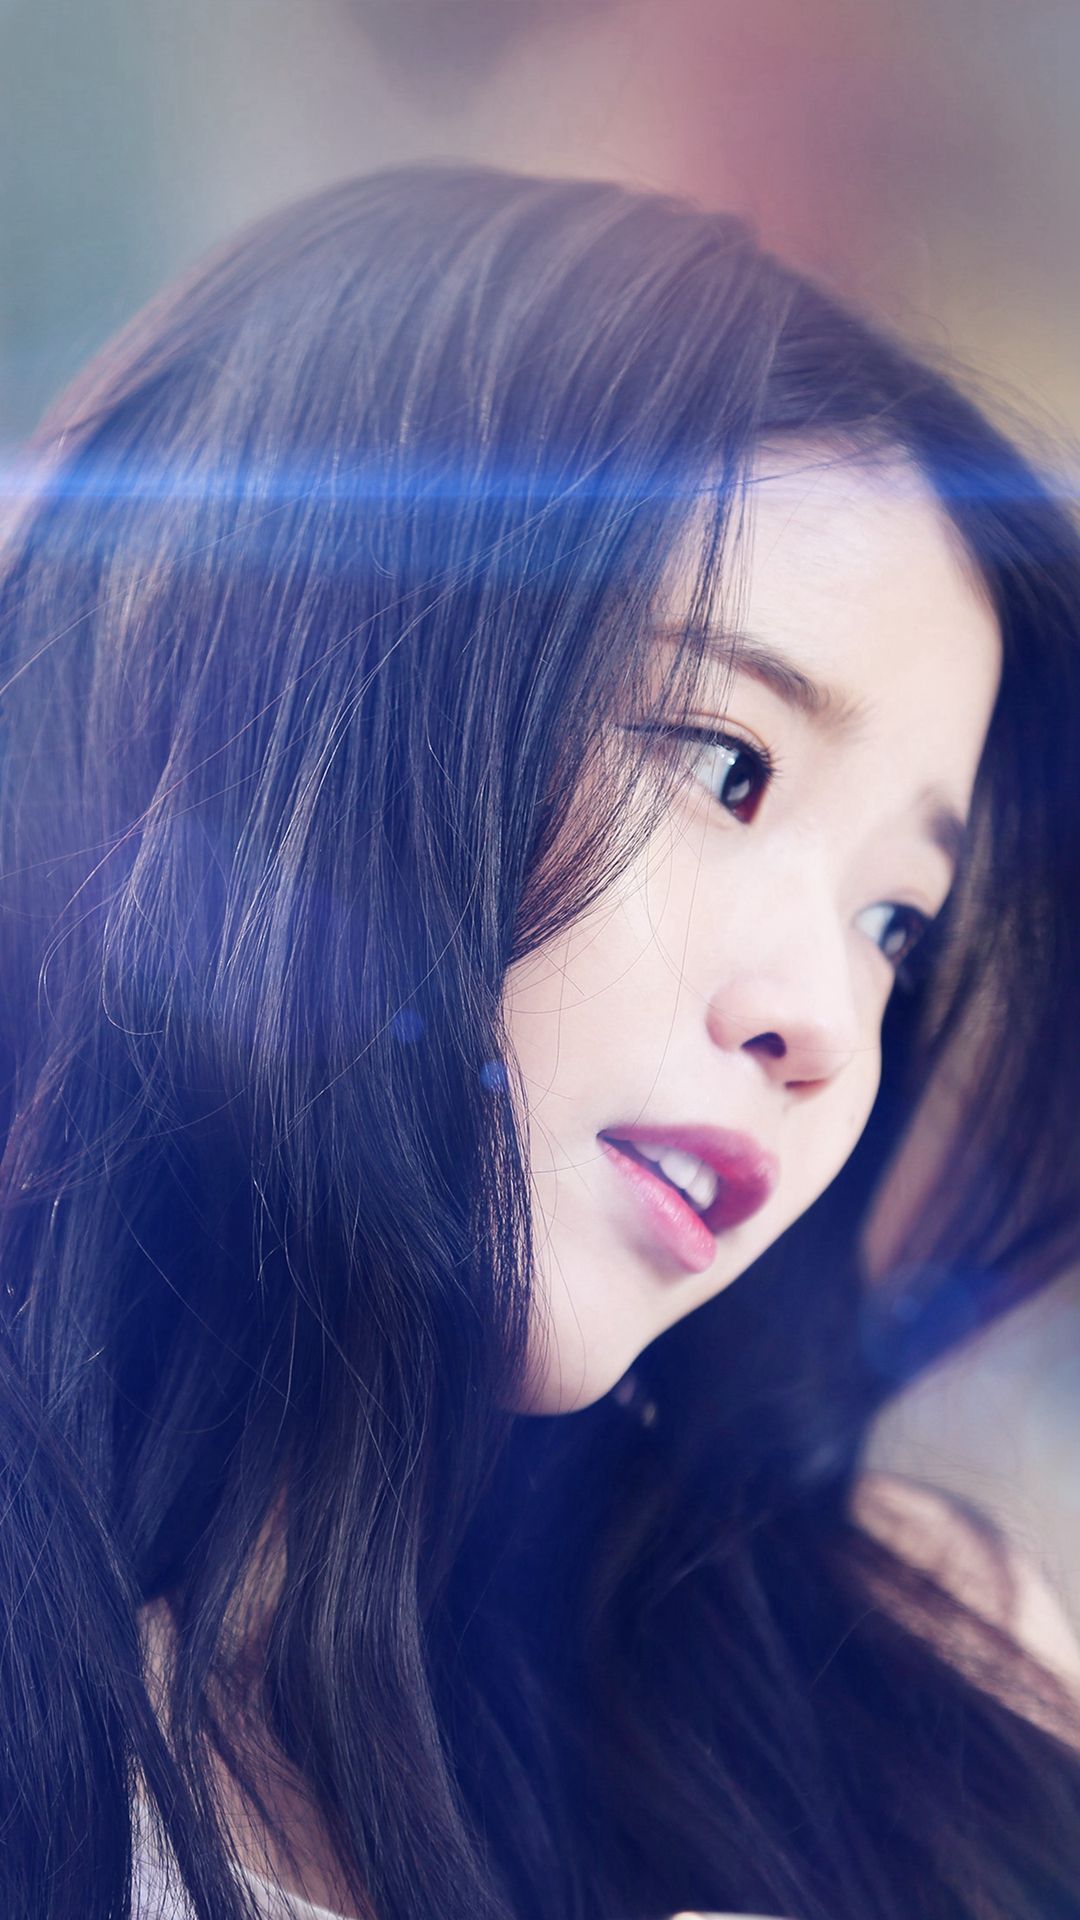 IU Kpop Beauty Girl Singer Blue Flare iPhone 8 Wallpaper. Beauty